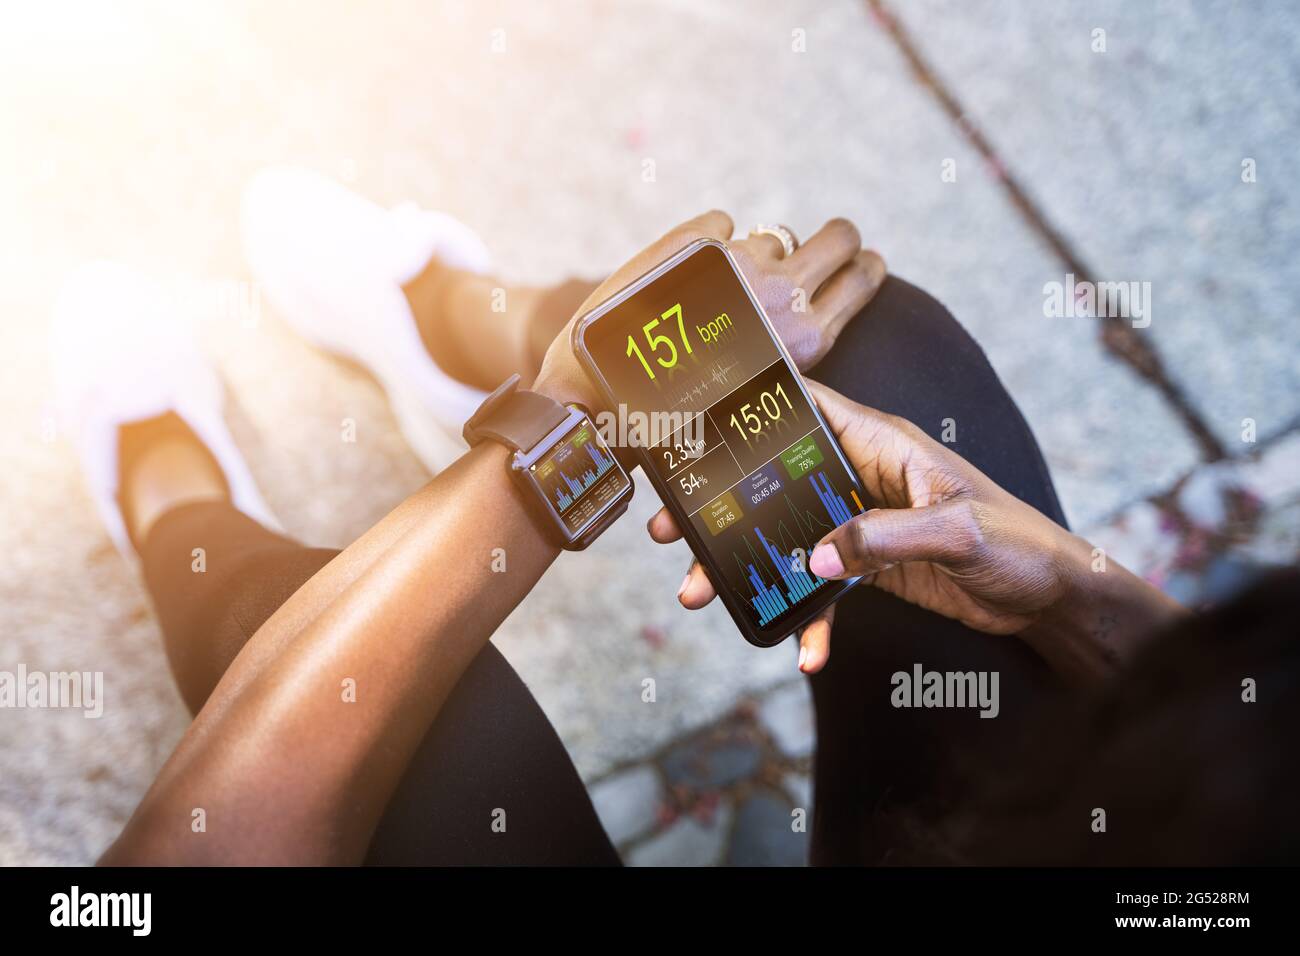 Smart Watch Health Gadget For Running. Runner App Stock Photo